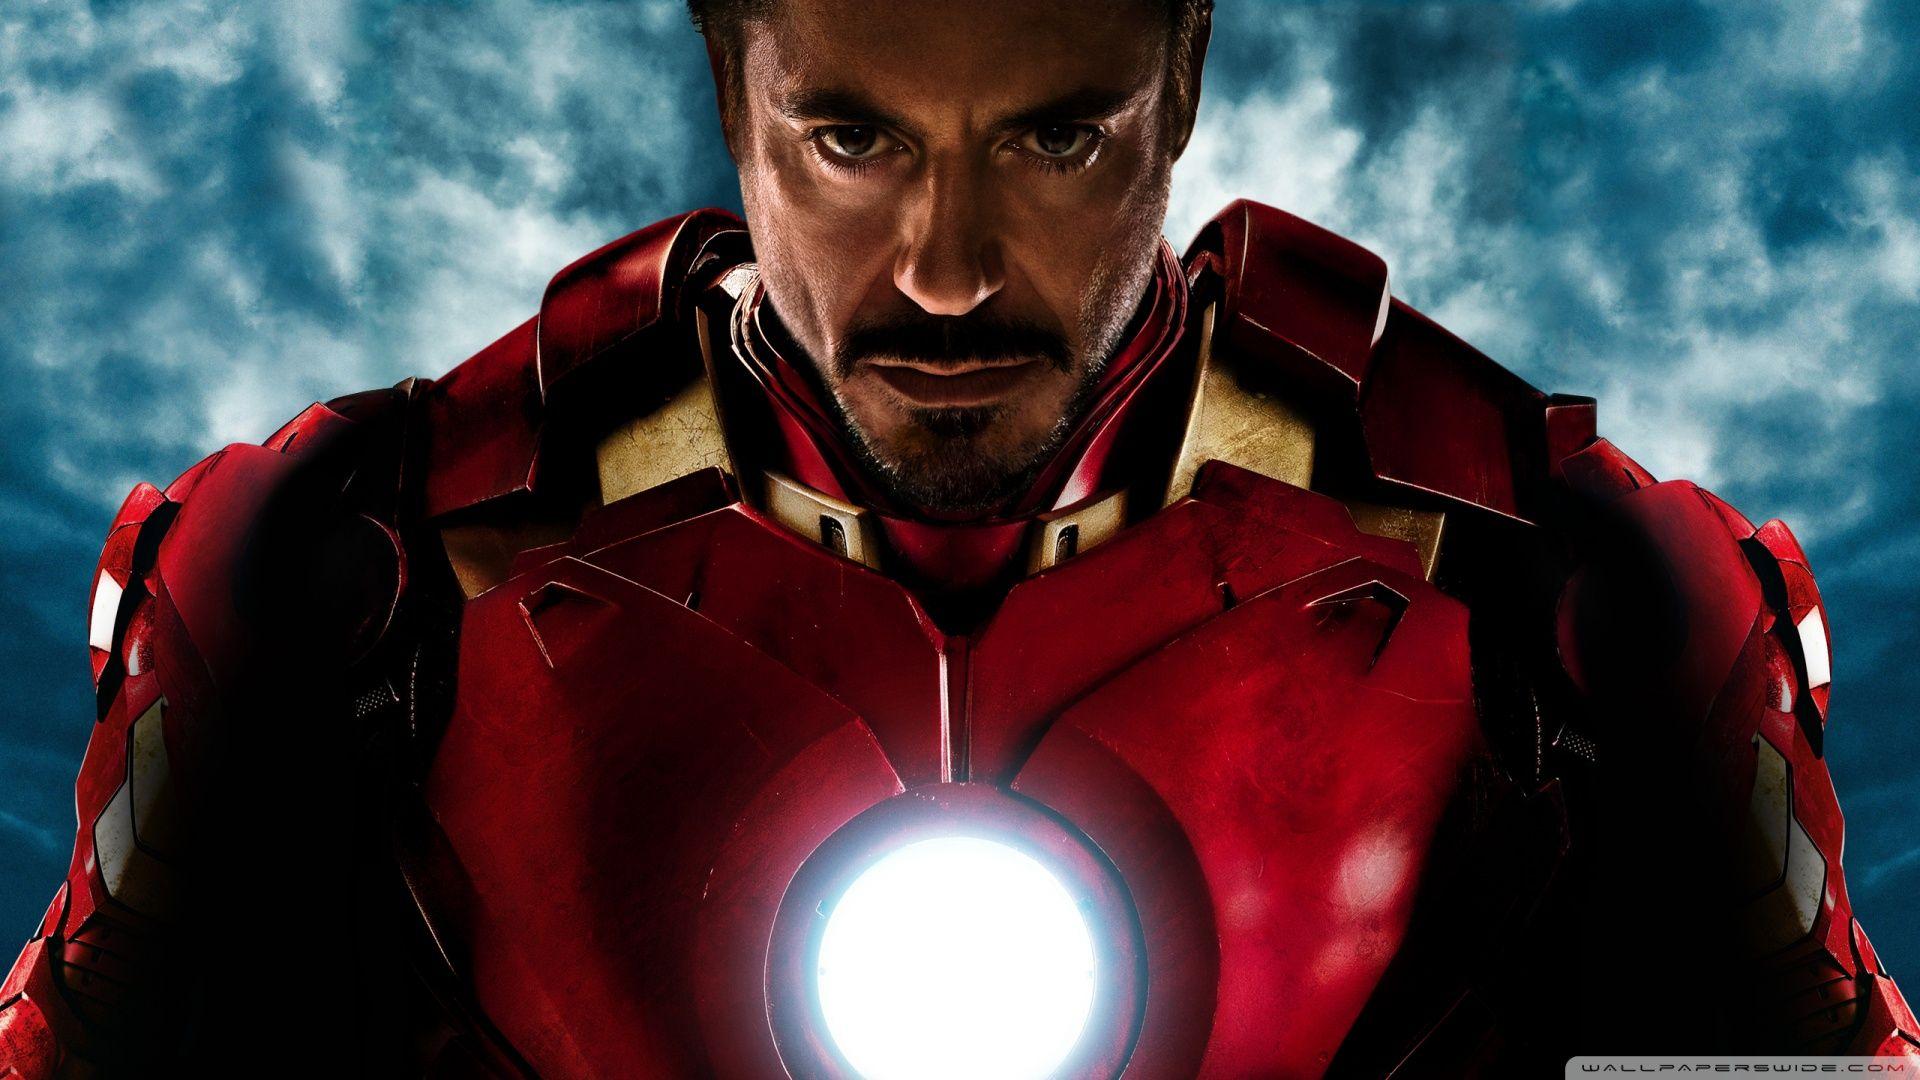 Tony Stark Iron Man 2 Wallpaper 1920x1080 Tony, Stark, Iron, Man, 2